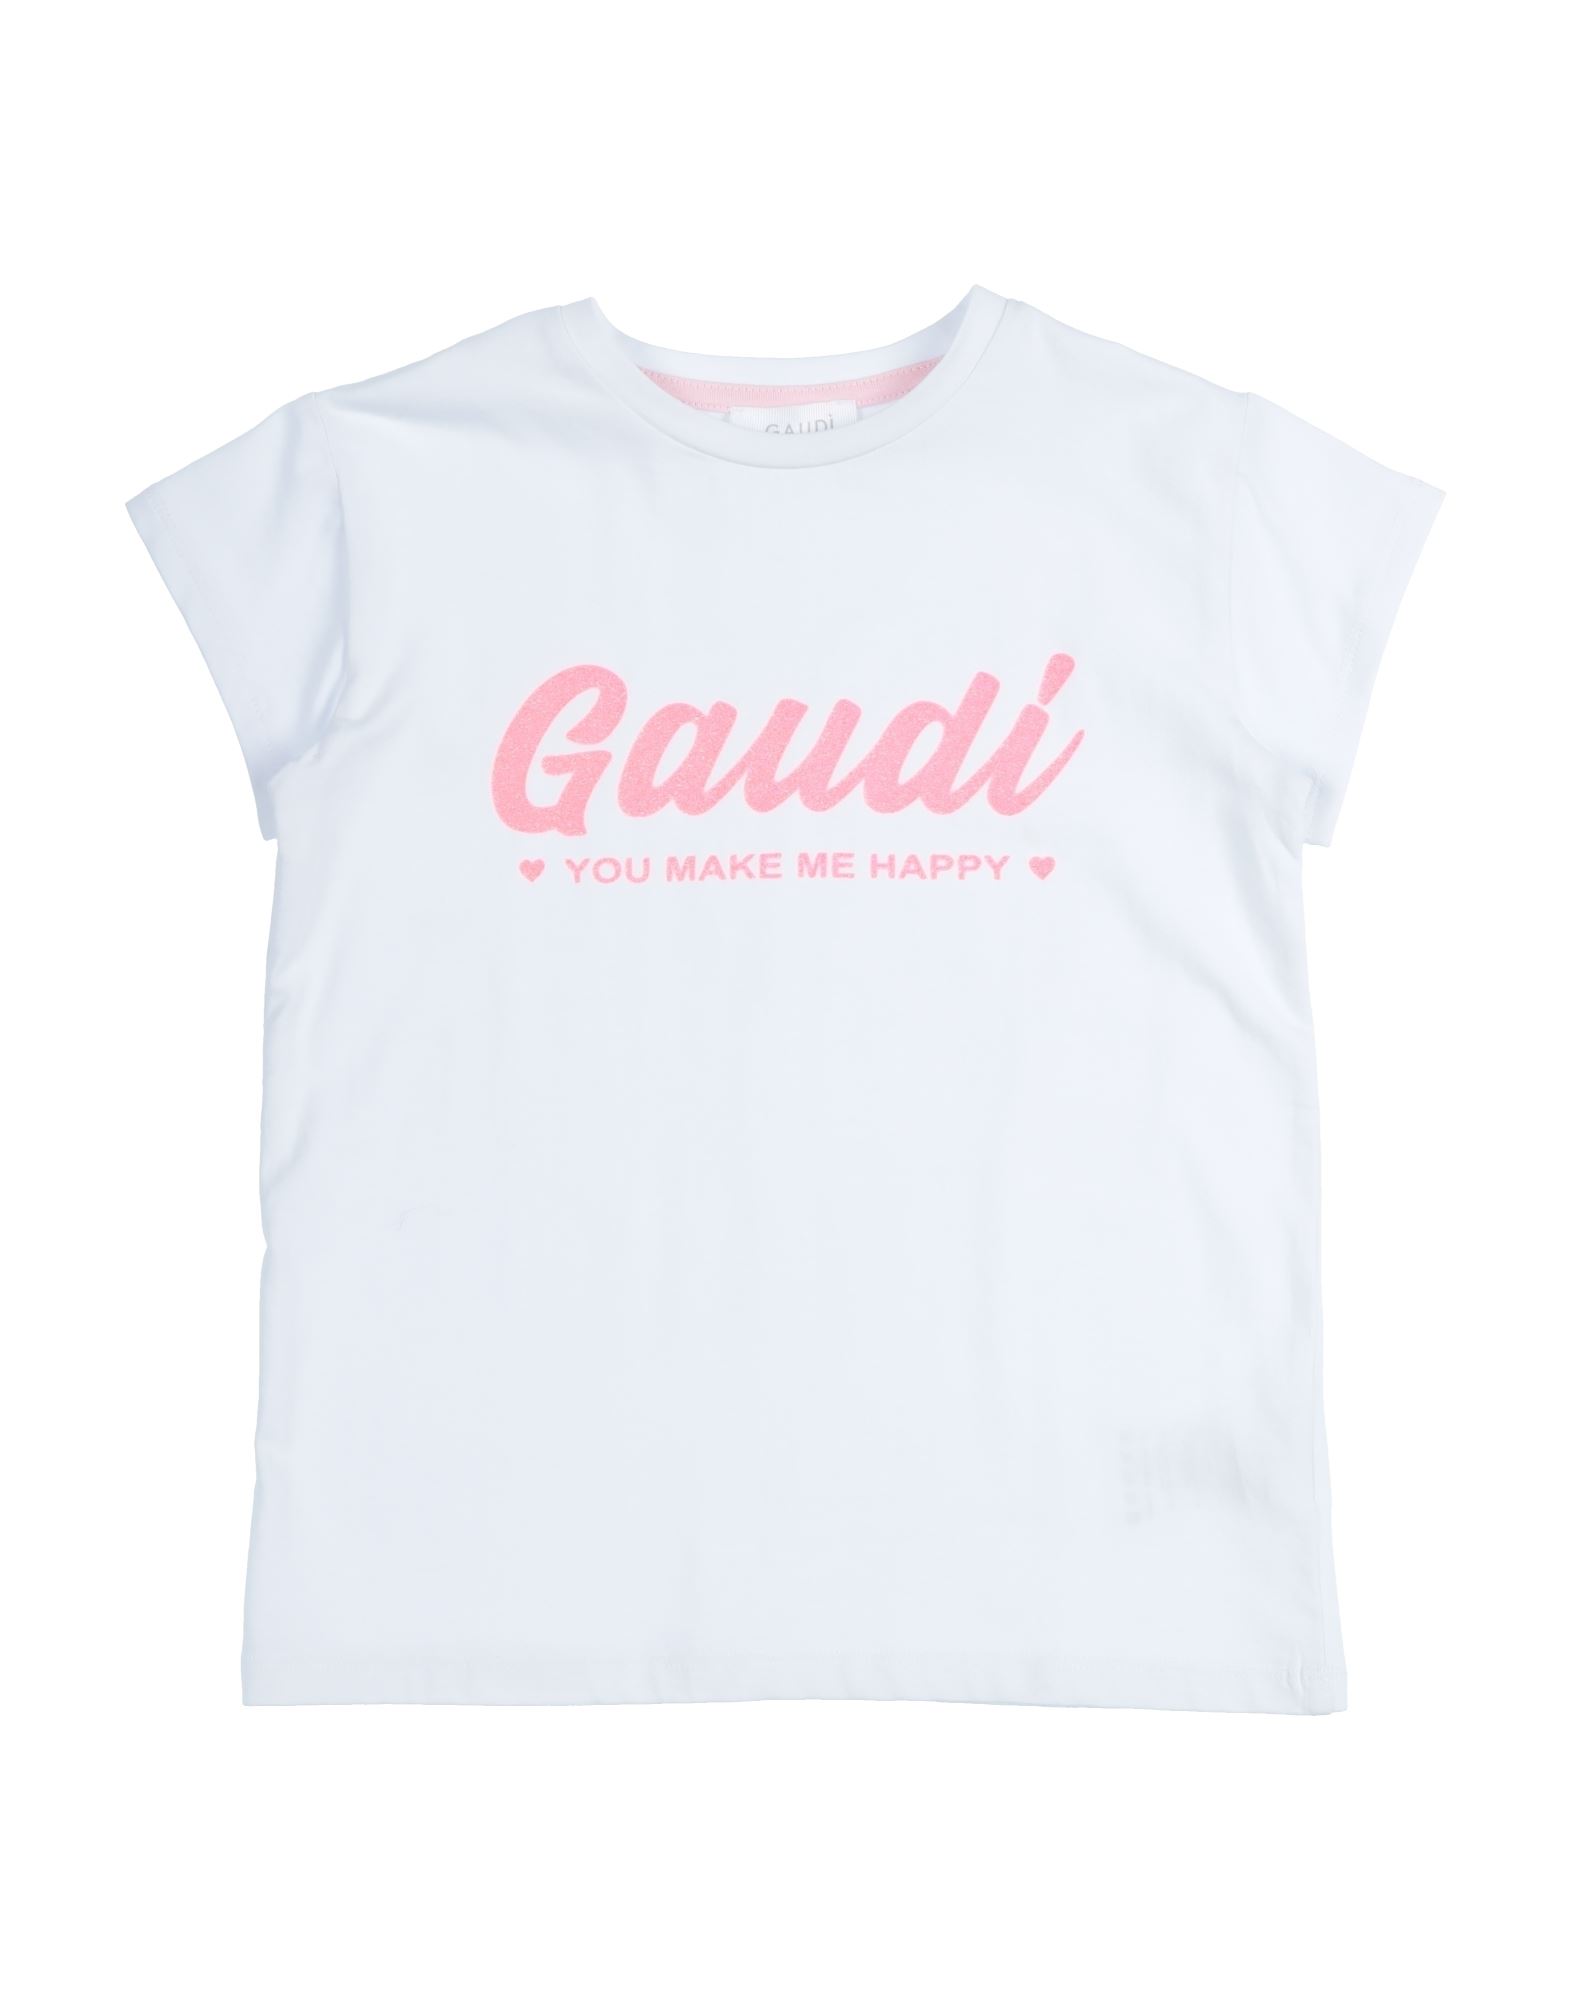 Gaudì Kids' T-shirts In White